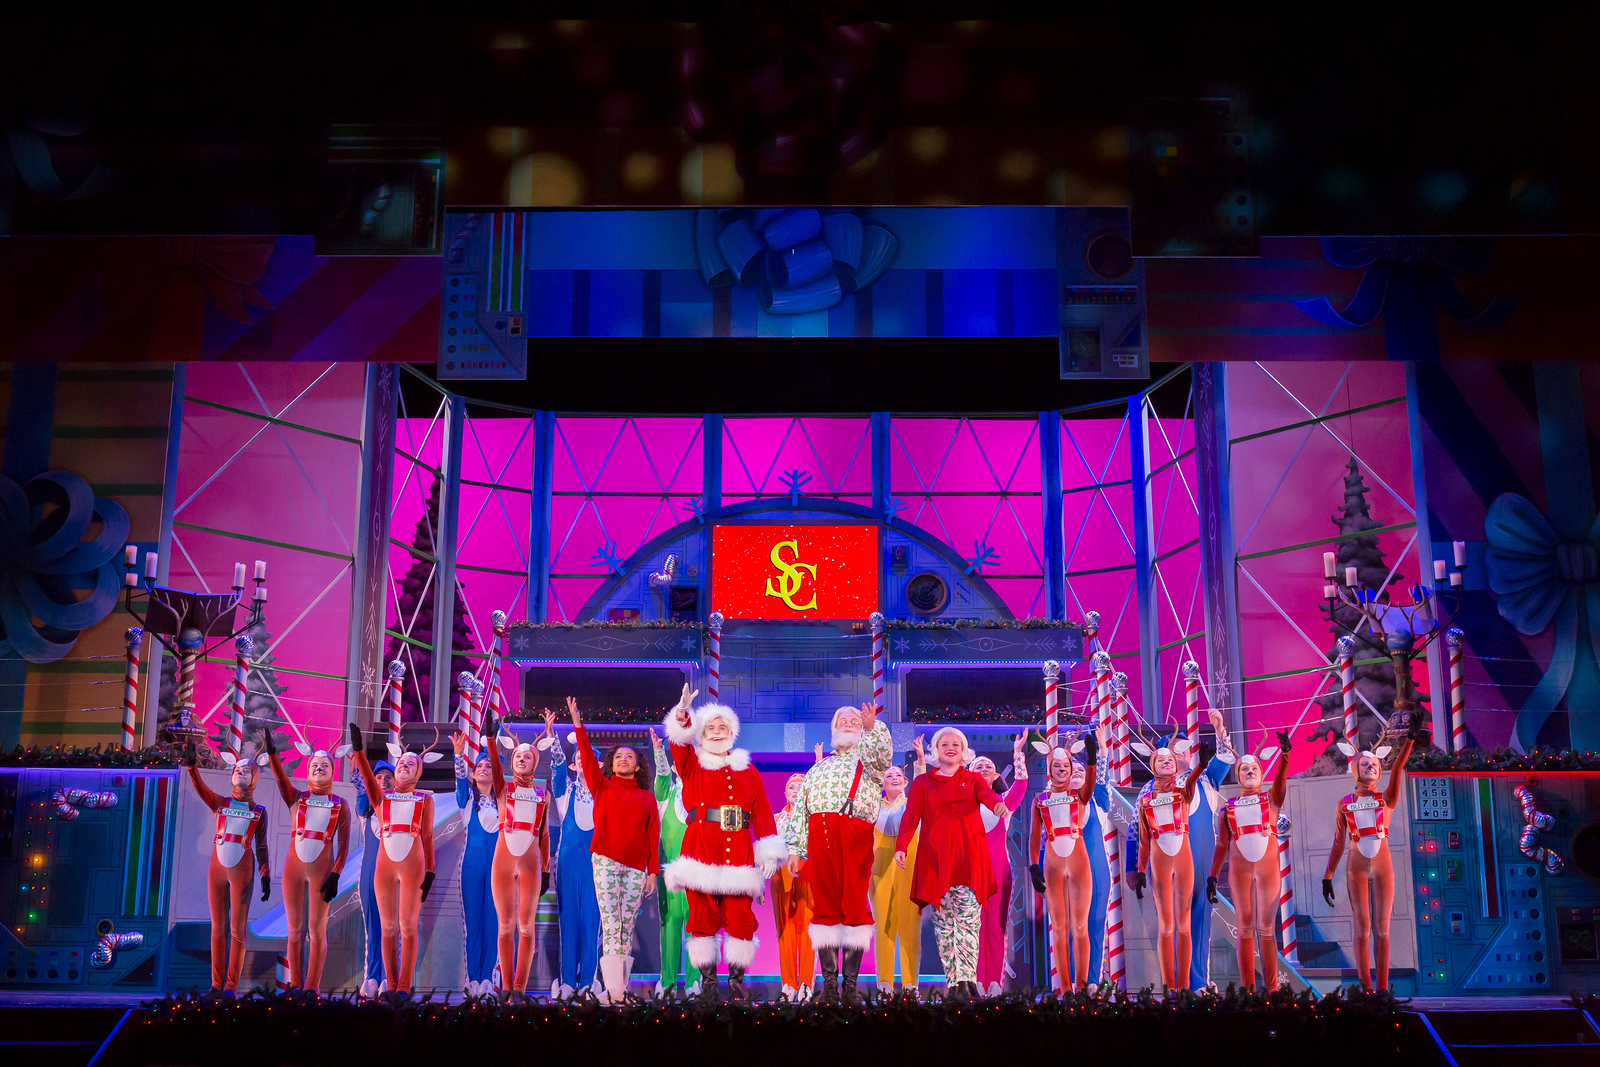 Santa and reindeer bowing on stage